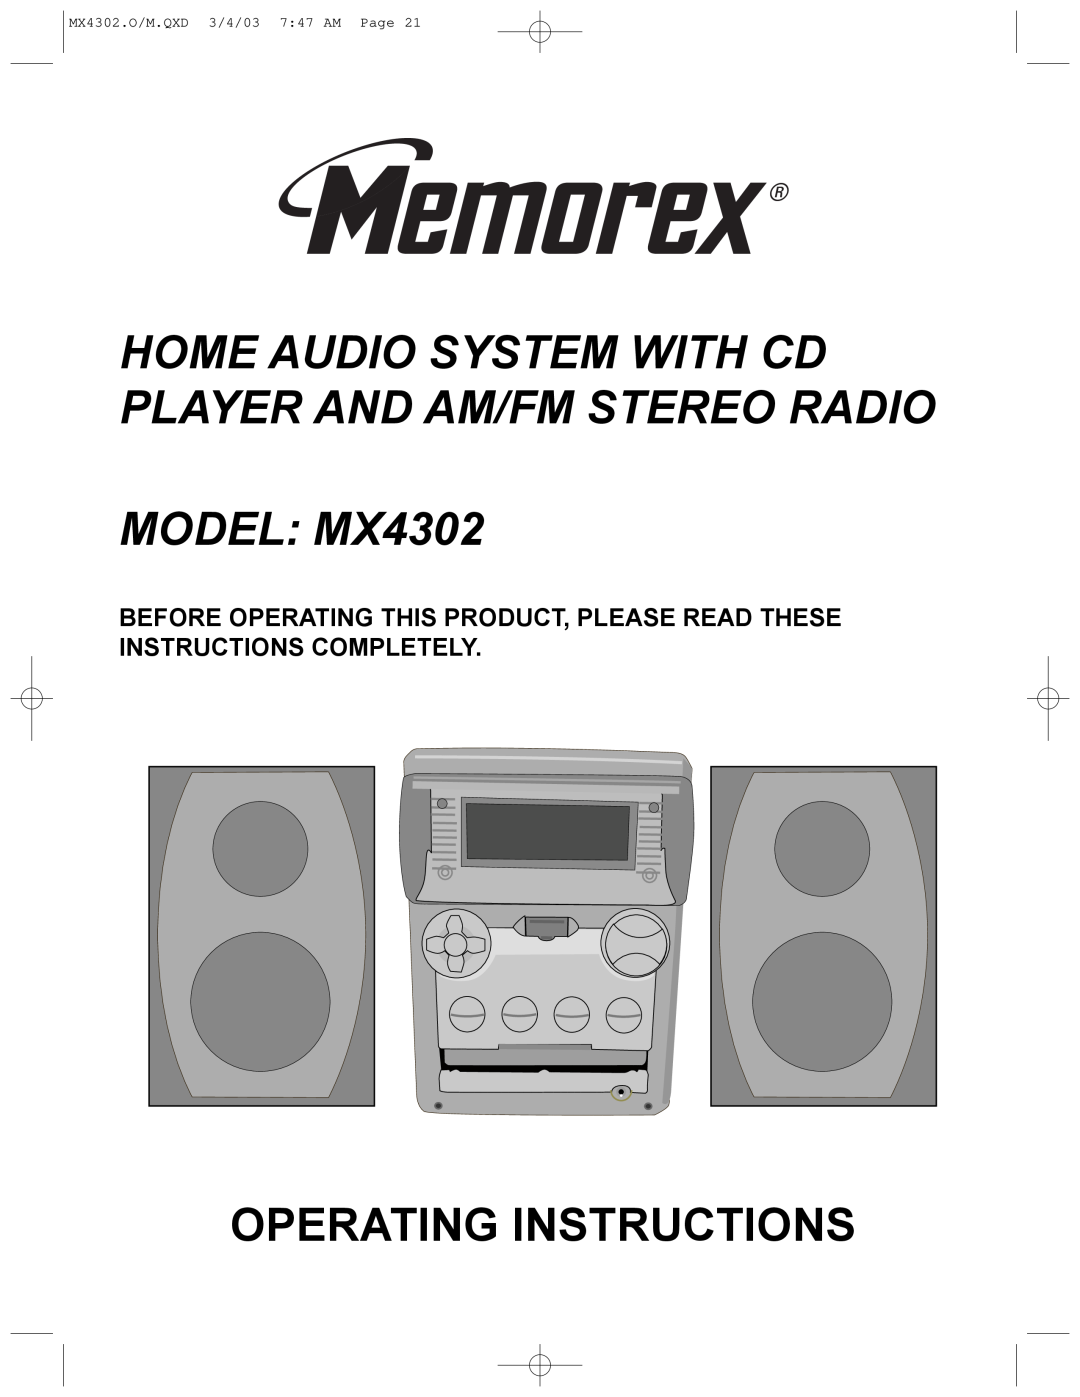 Memorex operating instructions MODEL MX4302, Operating Instructions, MX4302.O/M.QXD 3/4/03 747 AM Page 